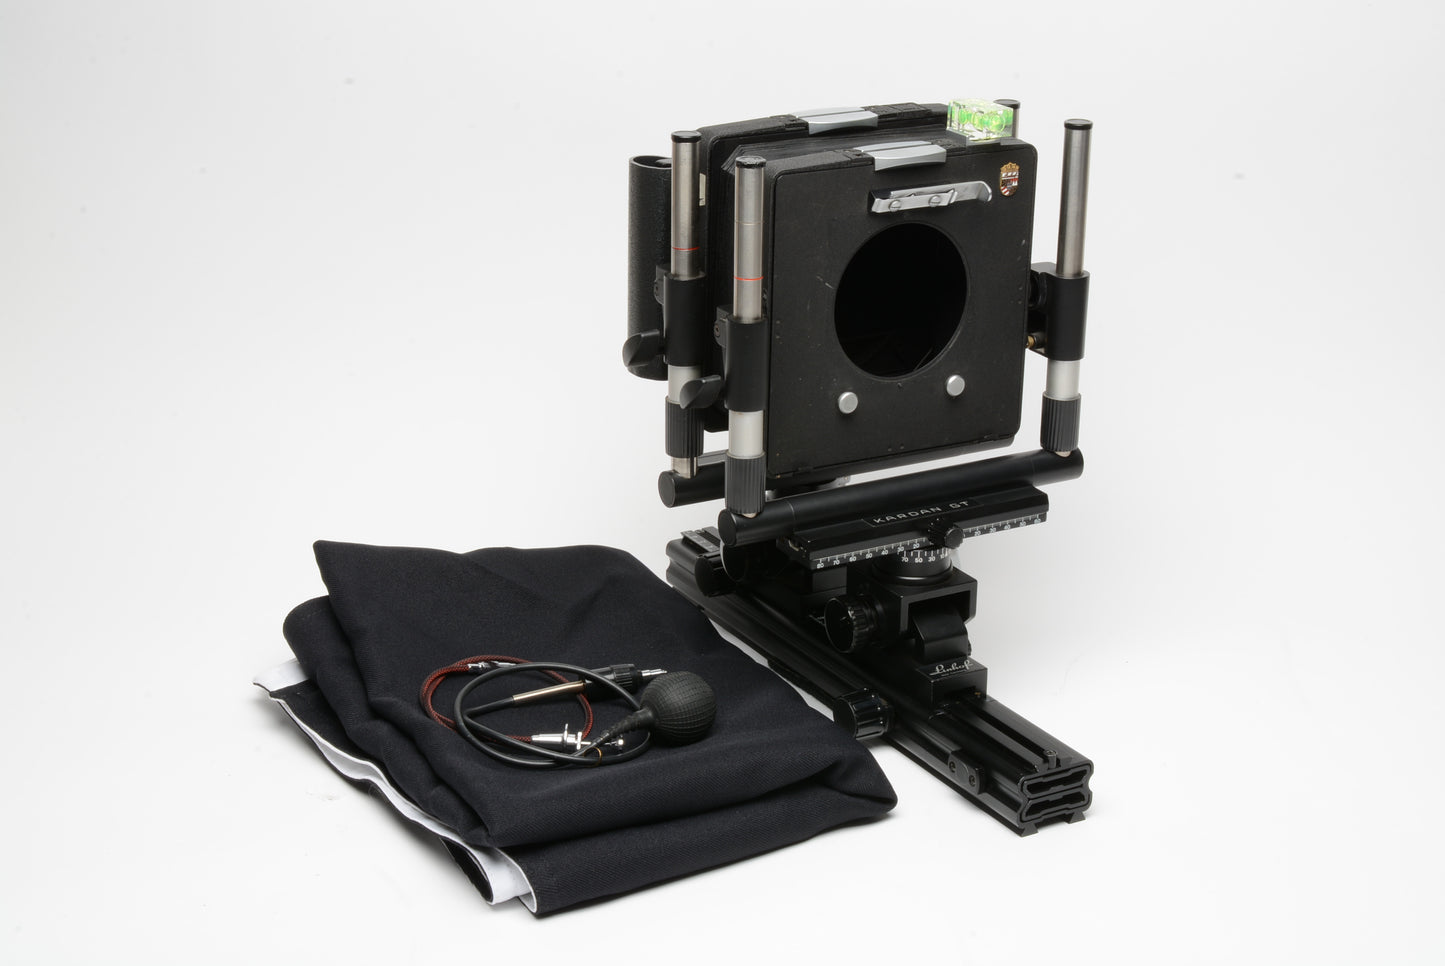 Linhof Kardan GT 4x5 camera, Aluminum case, Cable releases, Very clean, Nice!